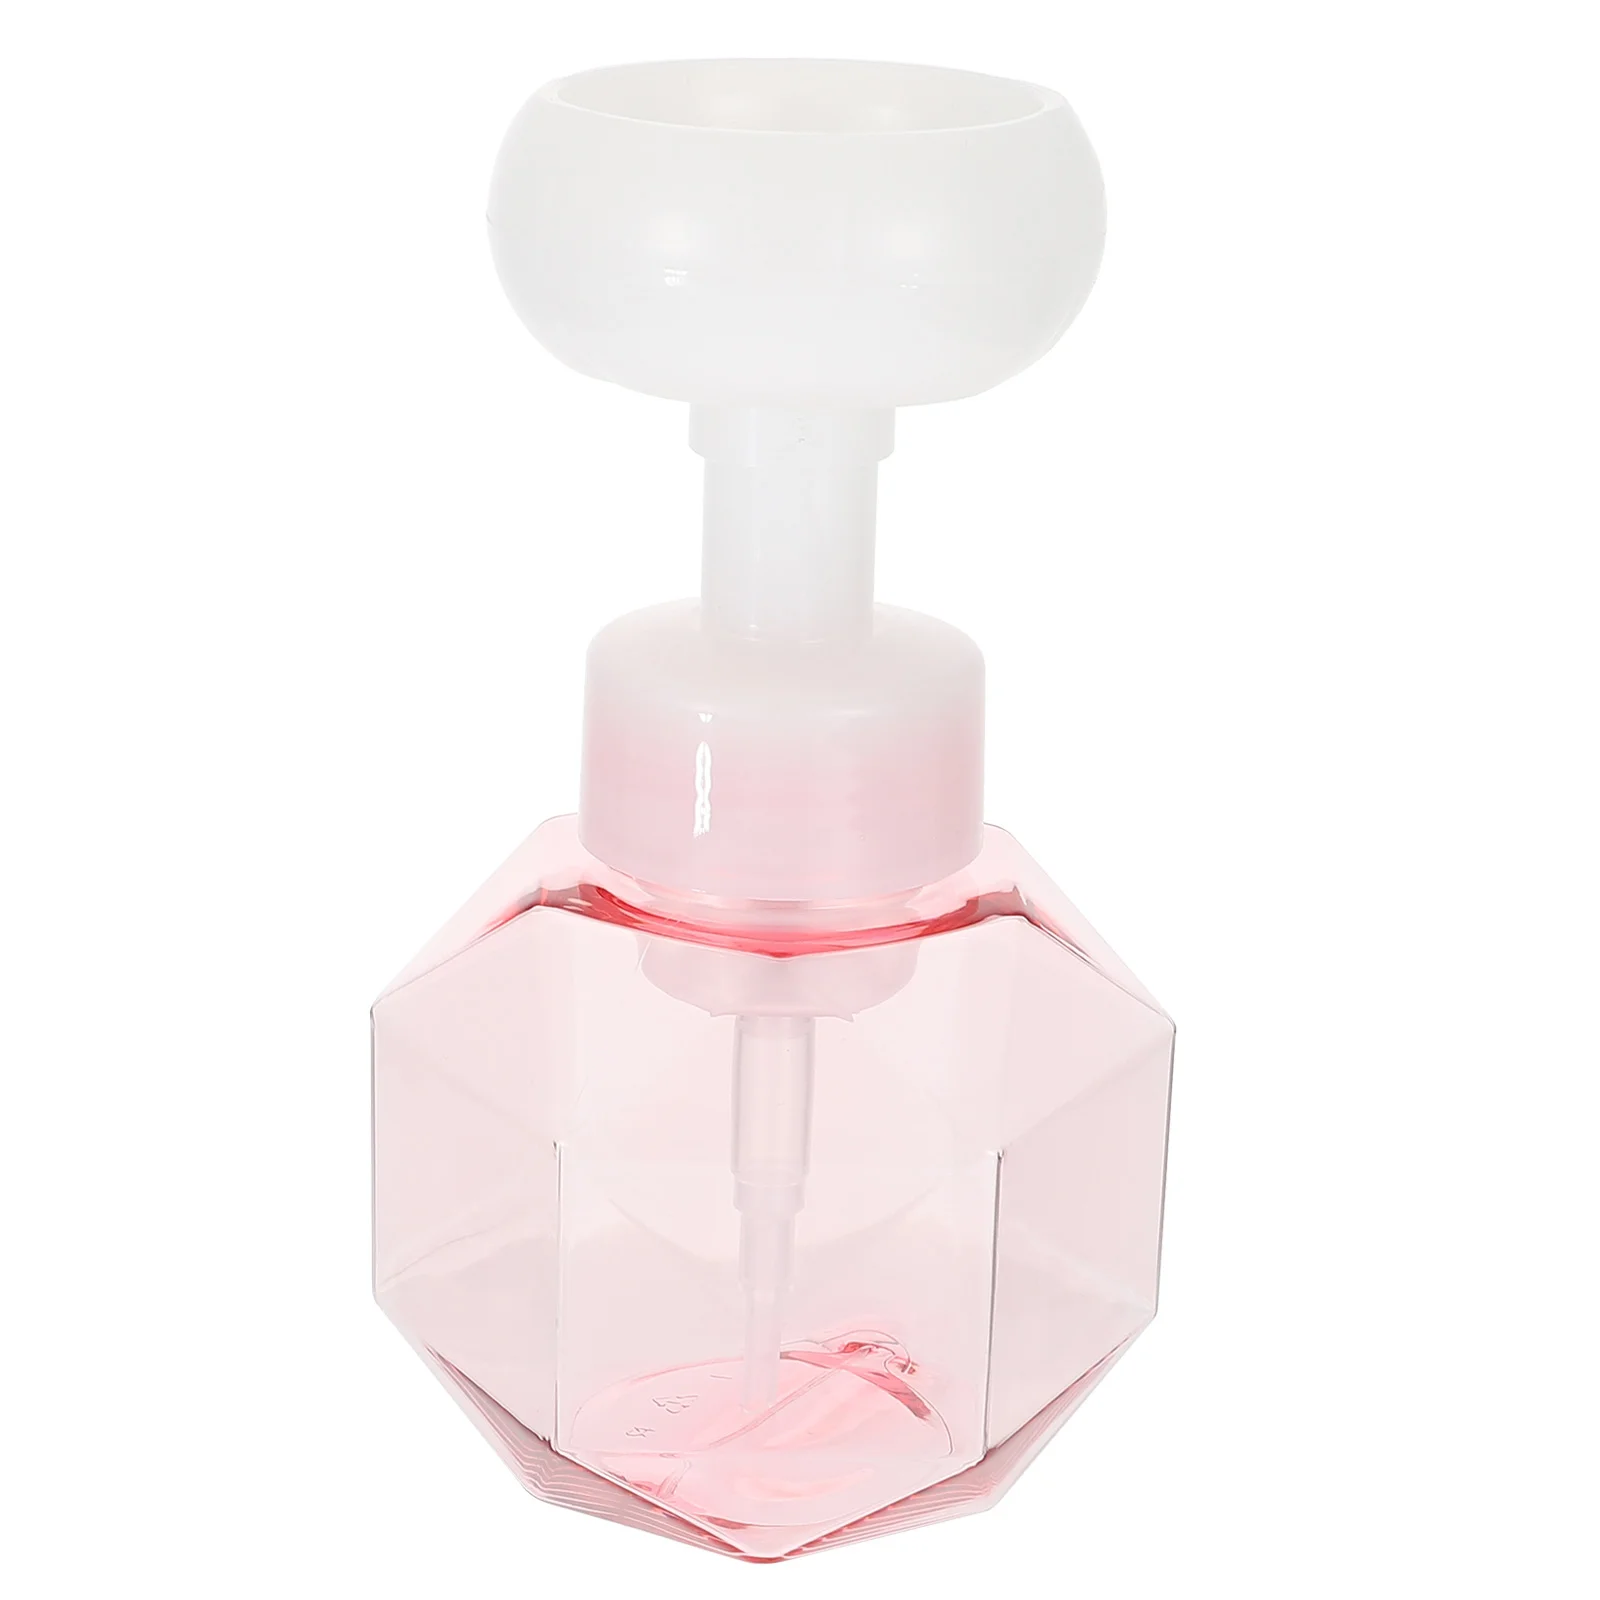 

Bottle Dispensersoap Maker Foaming Cleanser Pump Bubble Bubbler Travel Hand Face Spray Flower Empty Shampoo Bottles Cup Facial